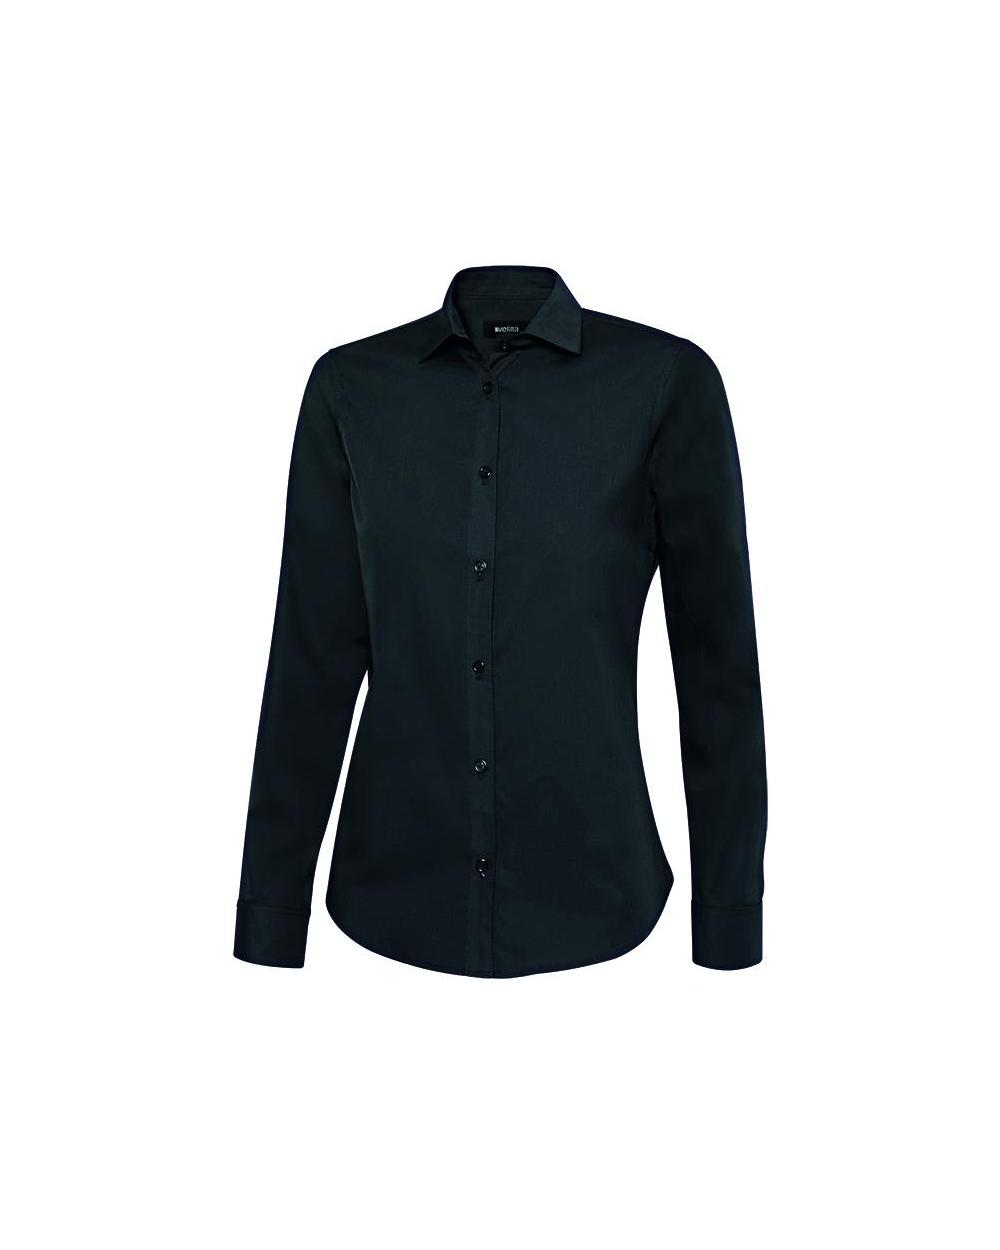 Comprar Camisa manga larga mujer serie 405011 online barato Negro